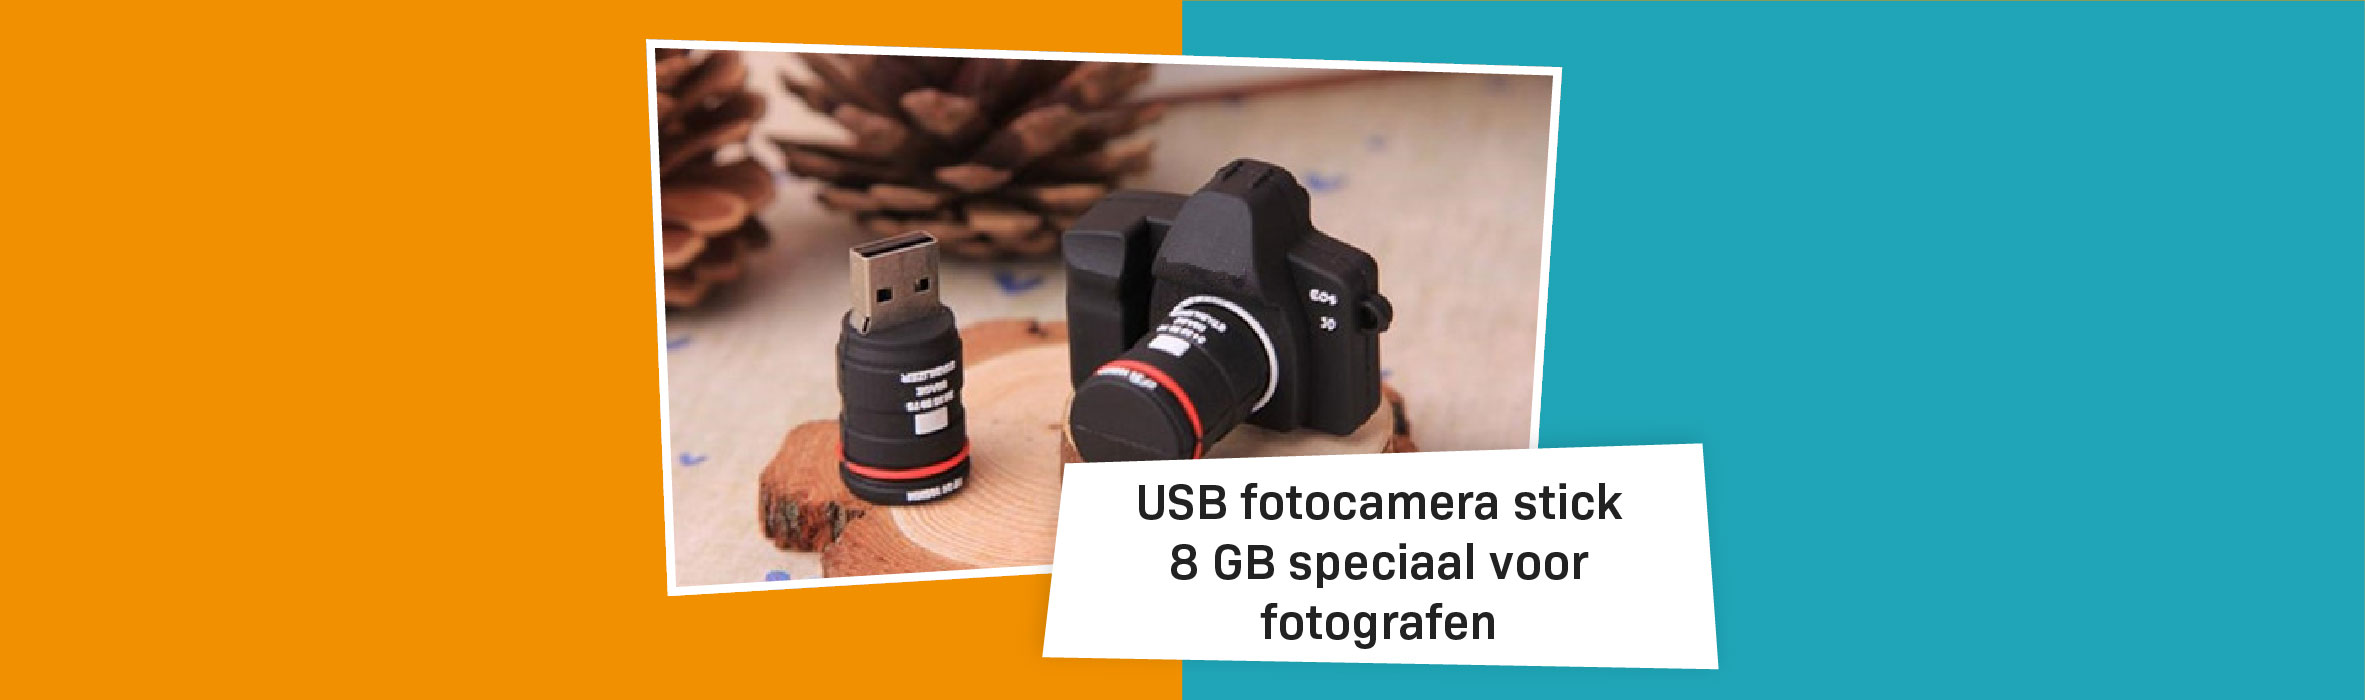 Chiavetta USB per fotocamera fotografica da 8 GB